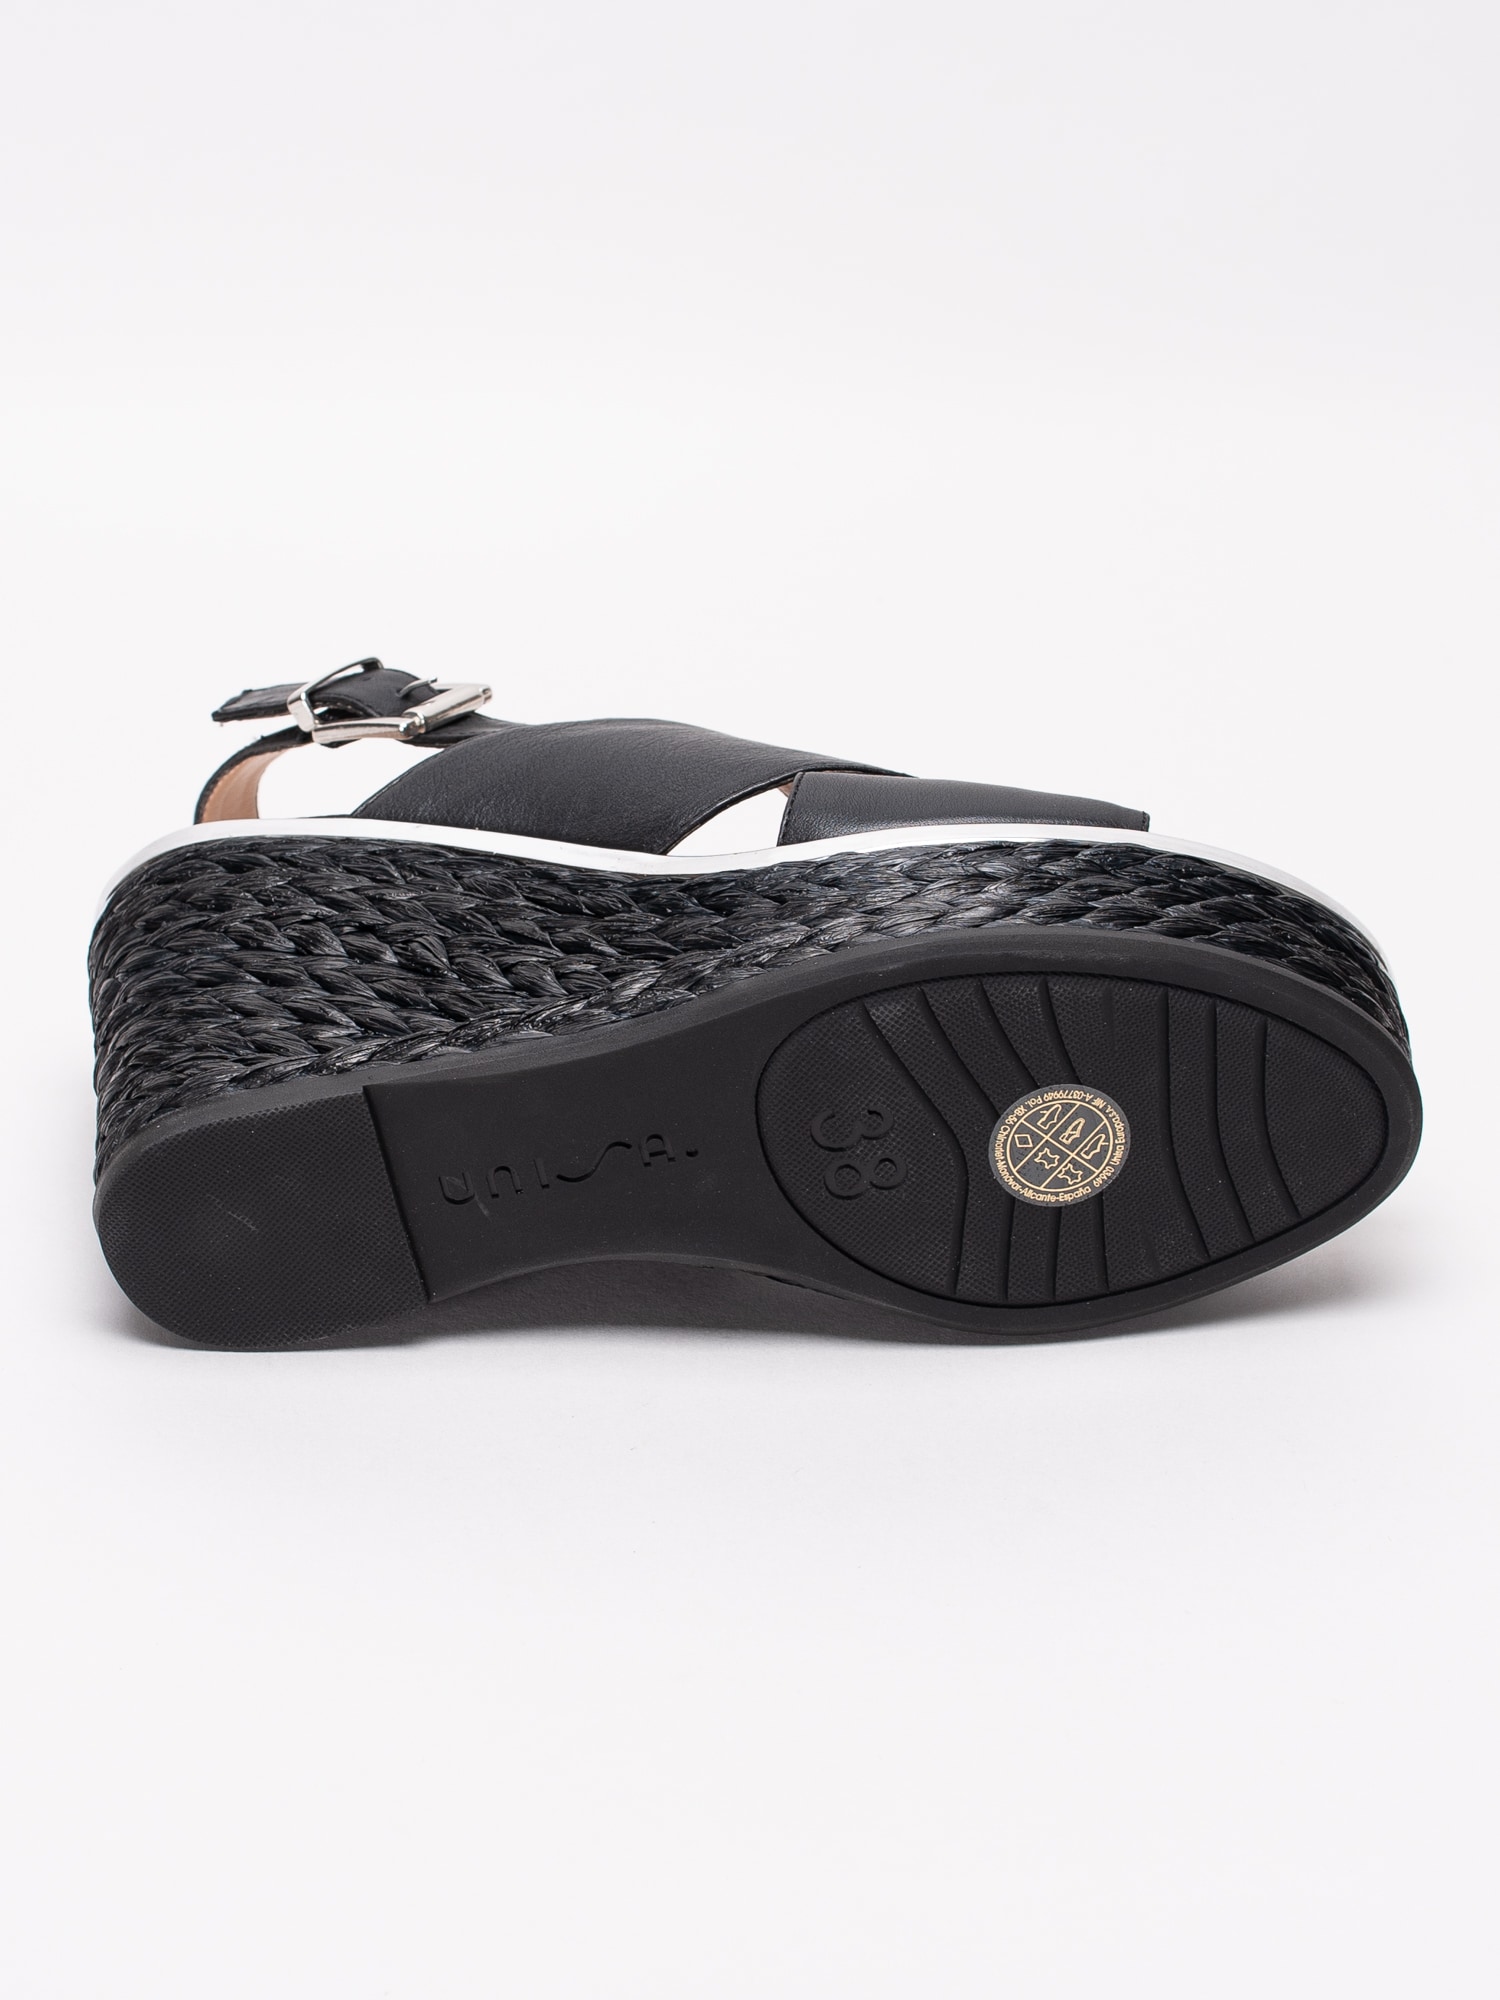 06191129 Unisa Nitol Black svarta kilklackade sandaletter med korslagda band-5